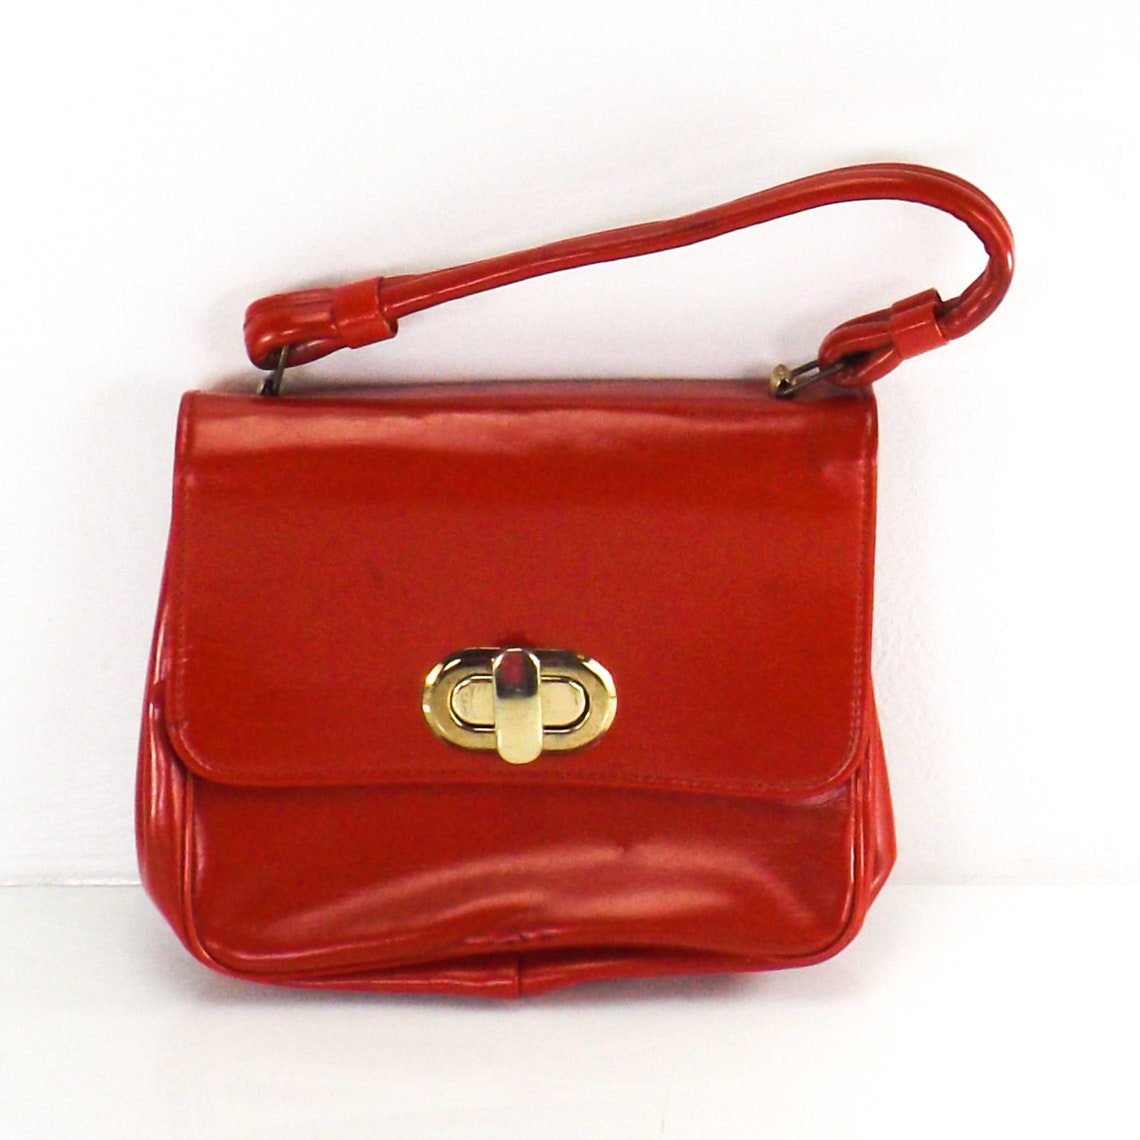 Red faux leather handbag purse 60s vintage red bag gold | Etsy